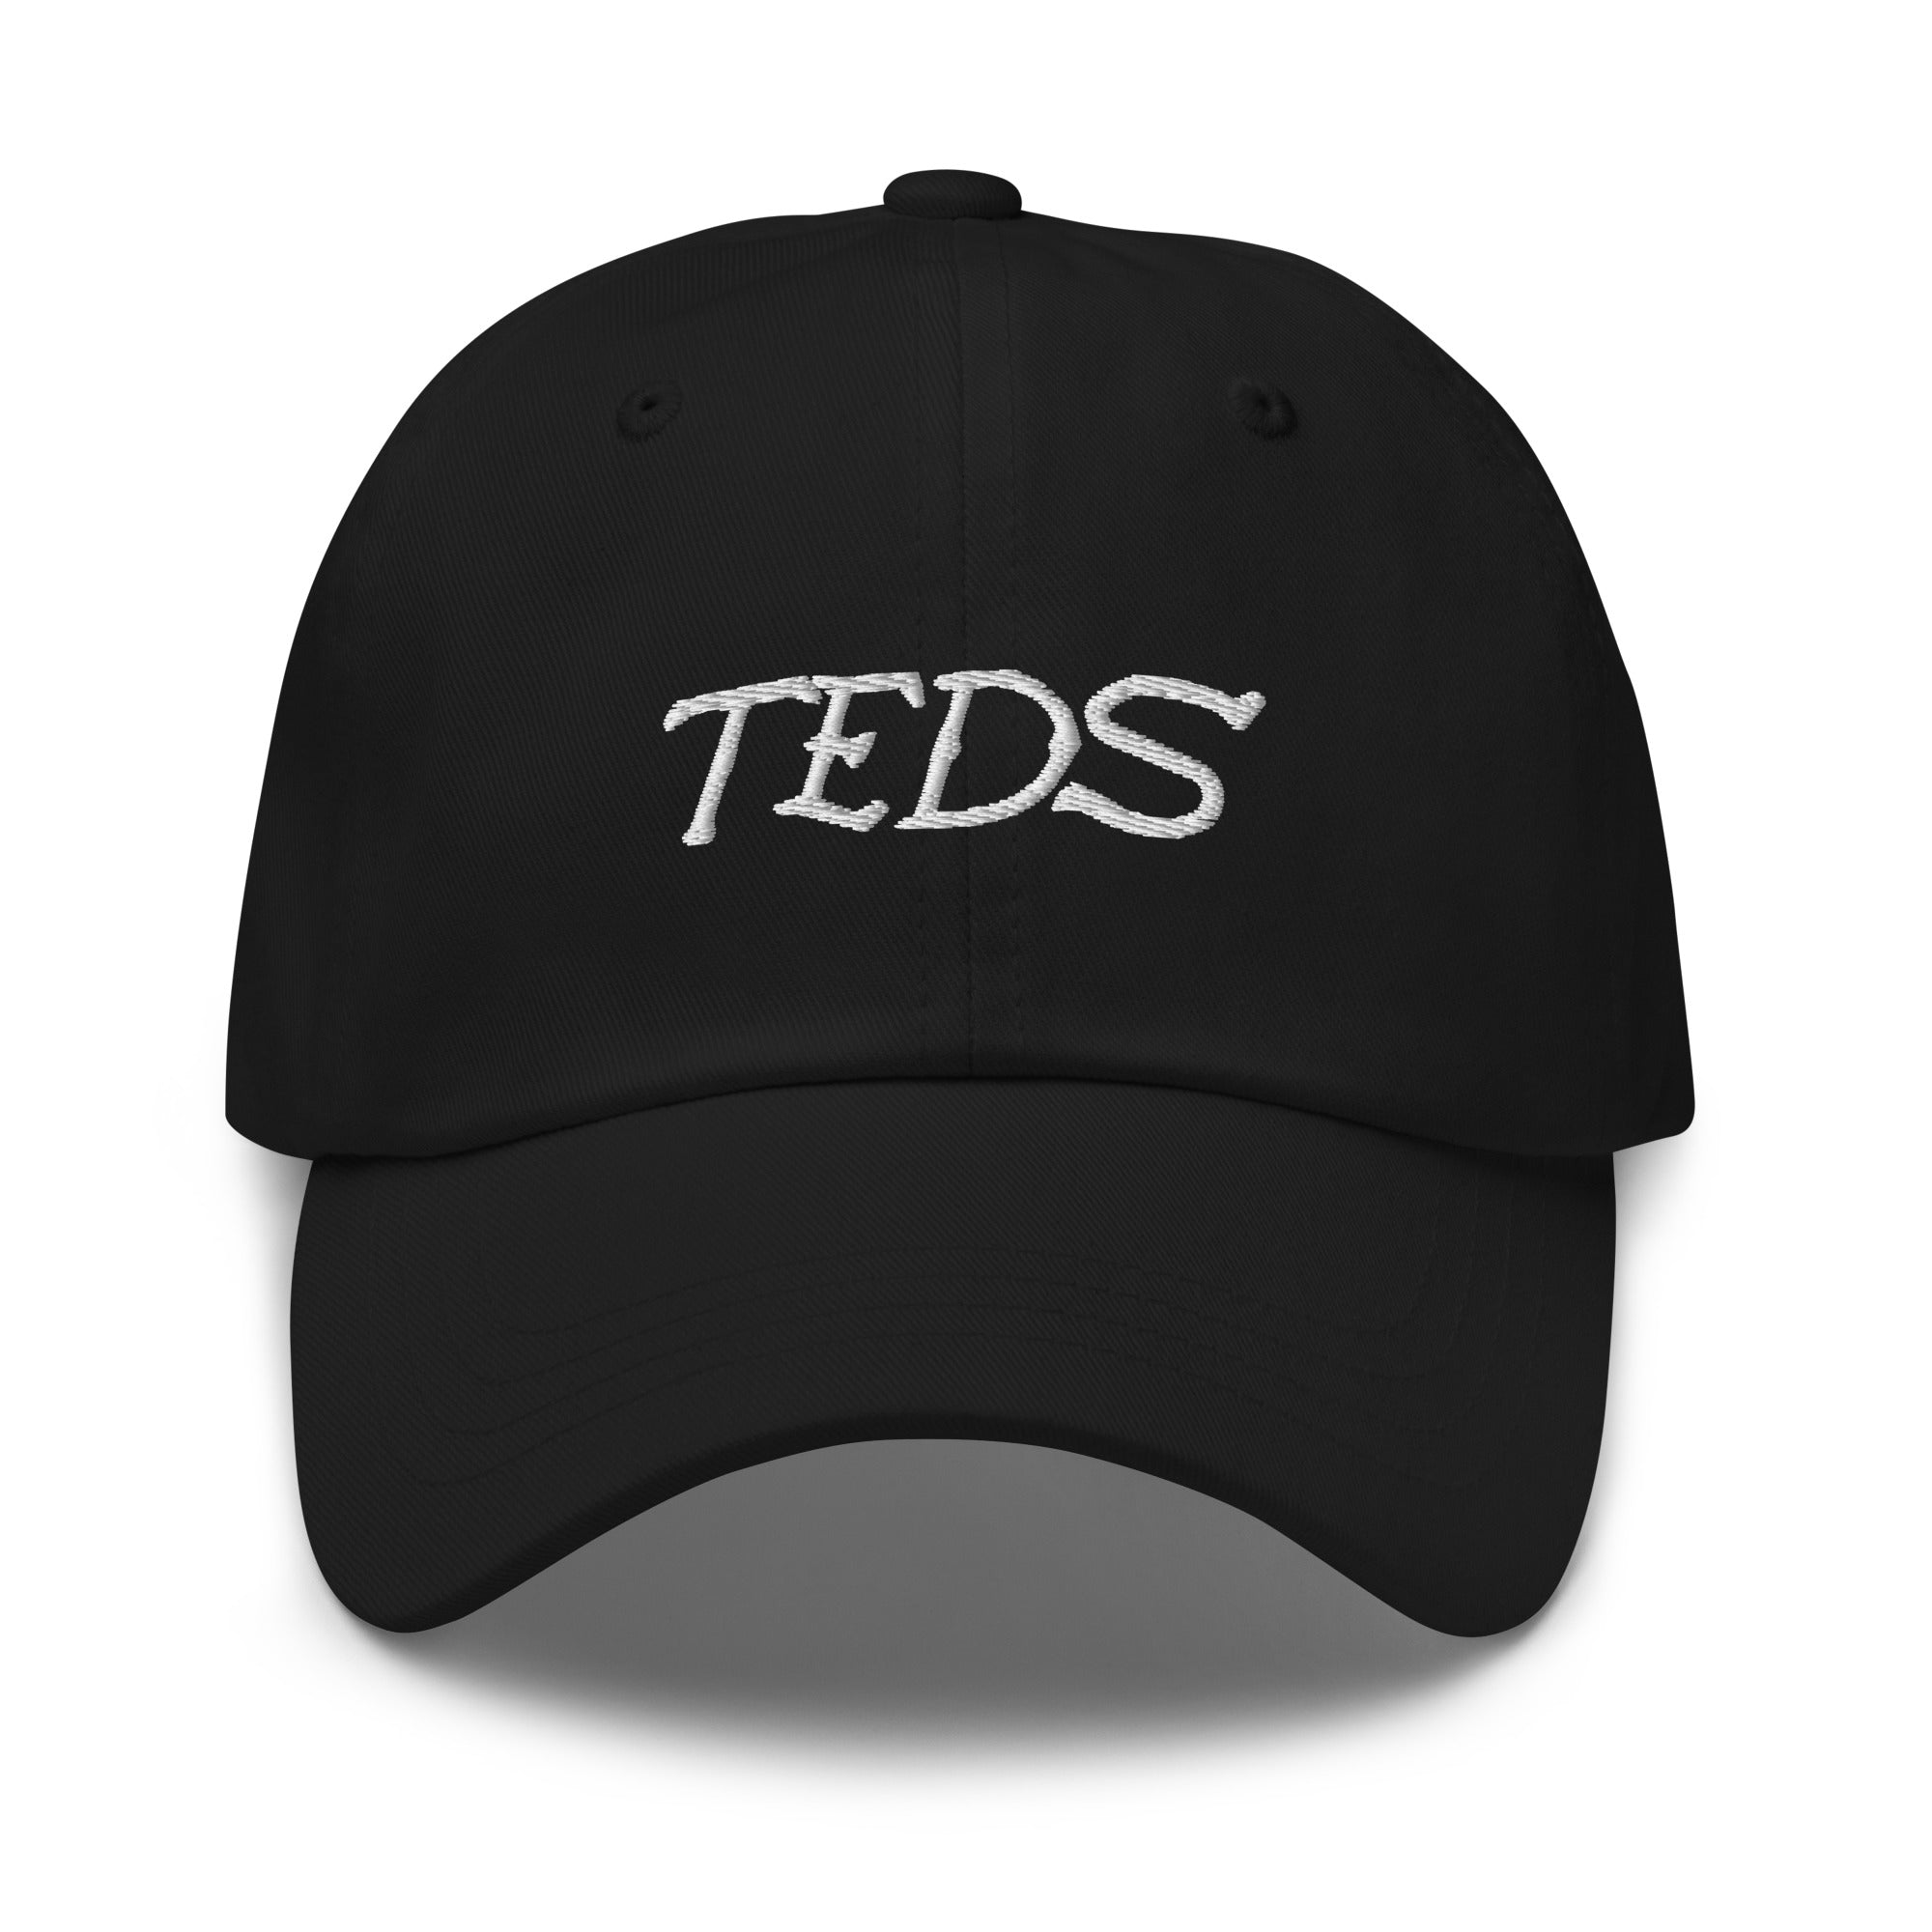 TEDS Dad hat